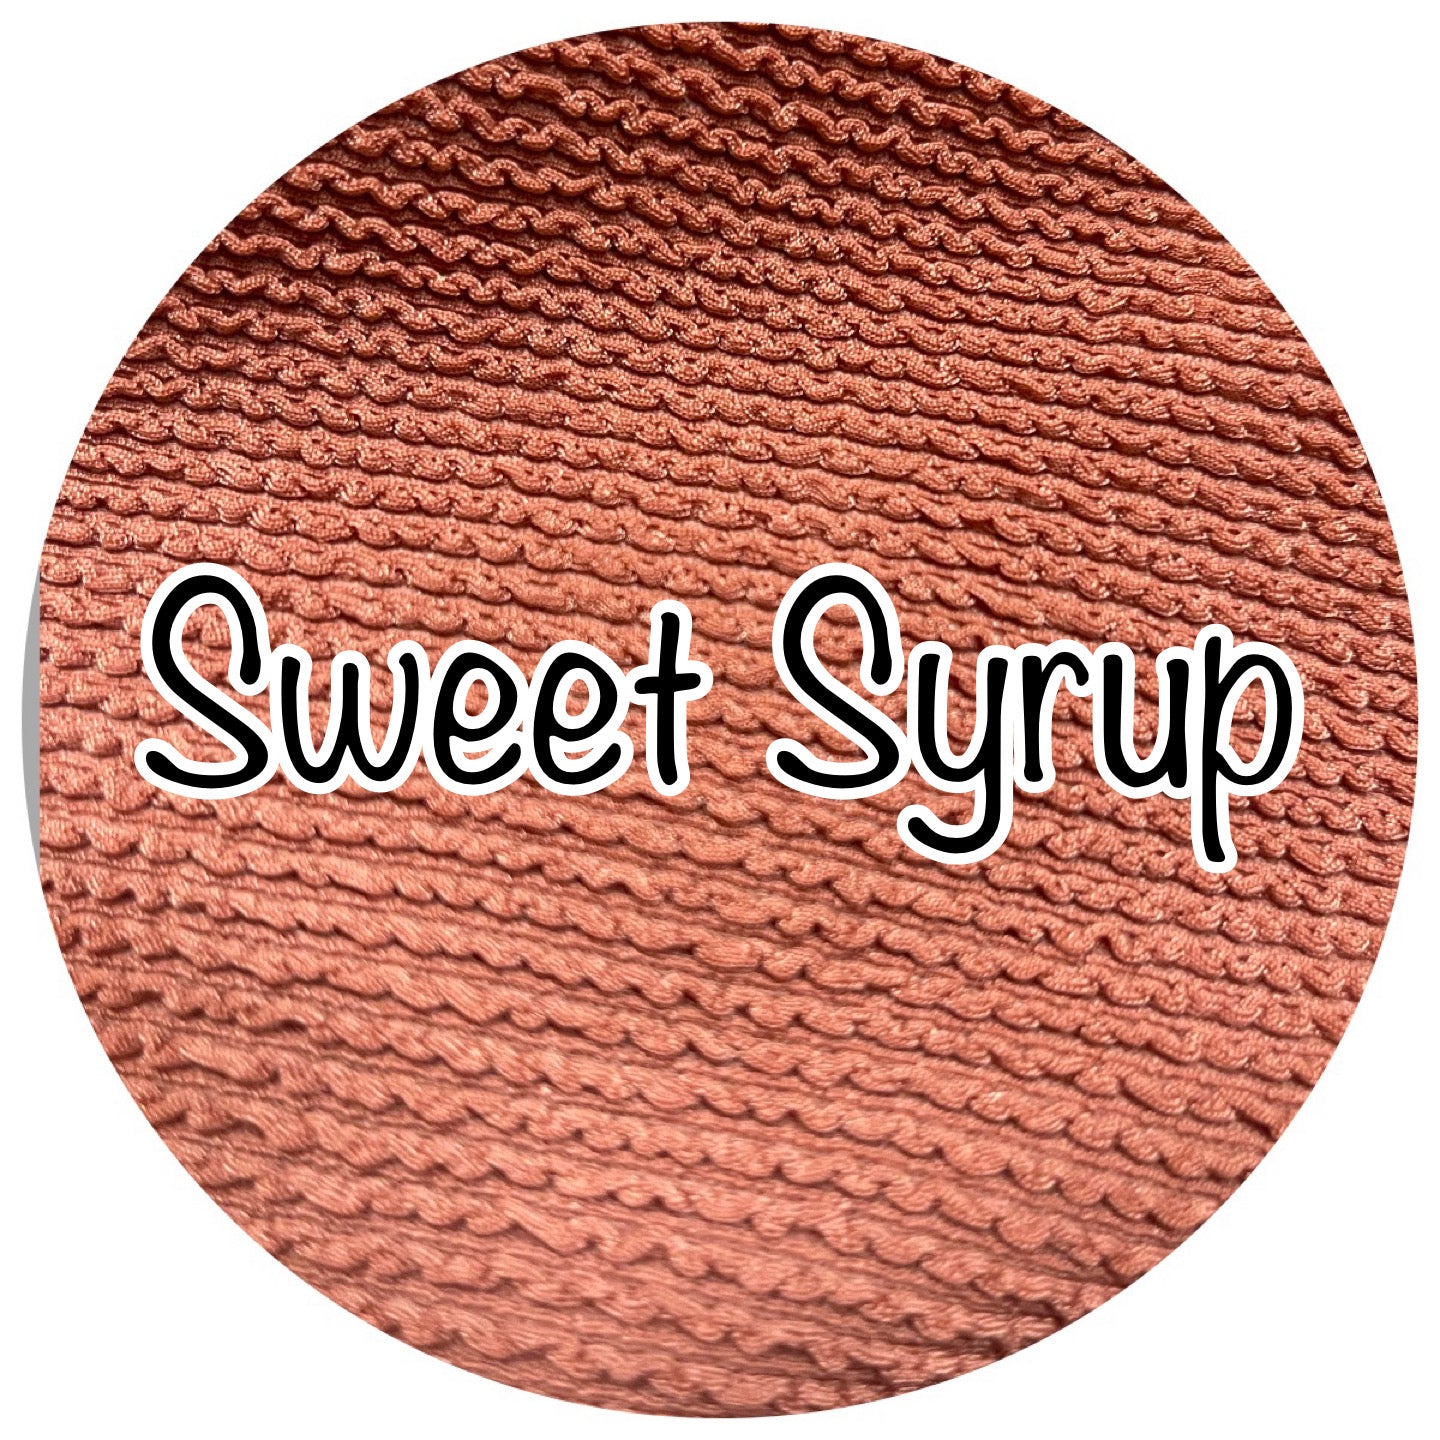 Sweet Syrup Popcorn